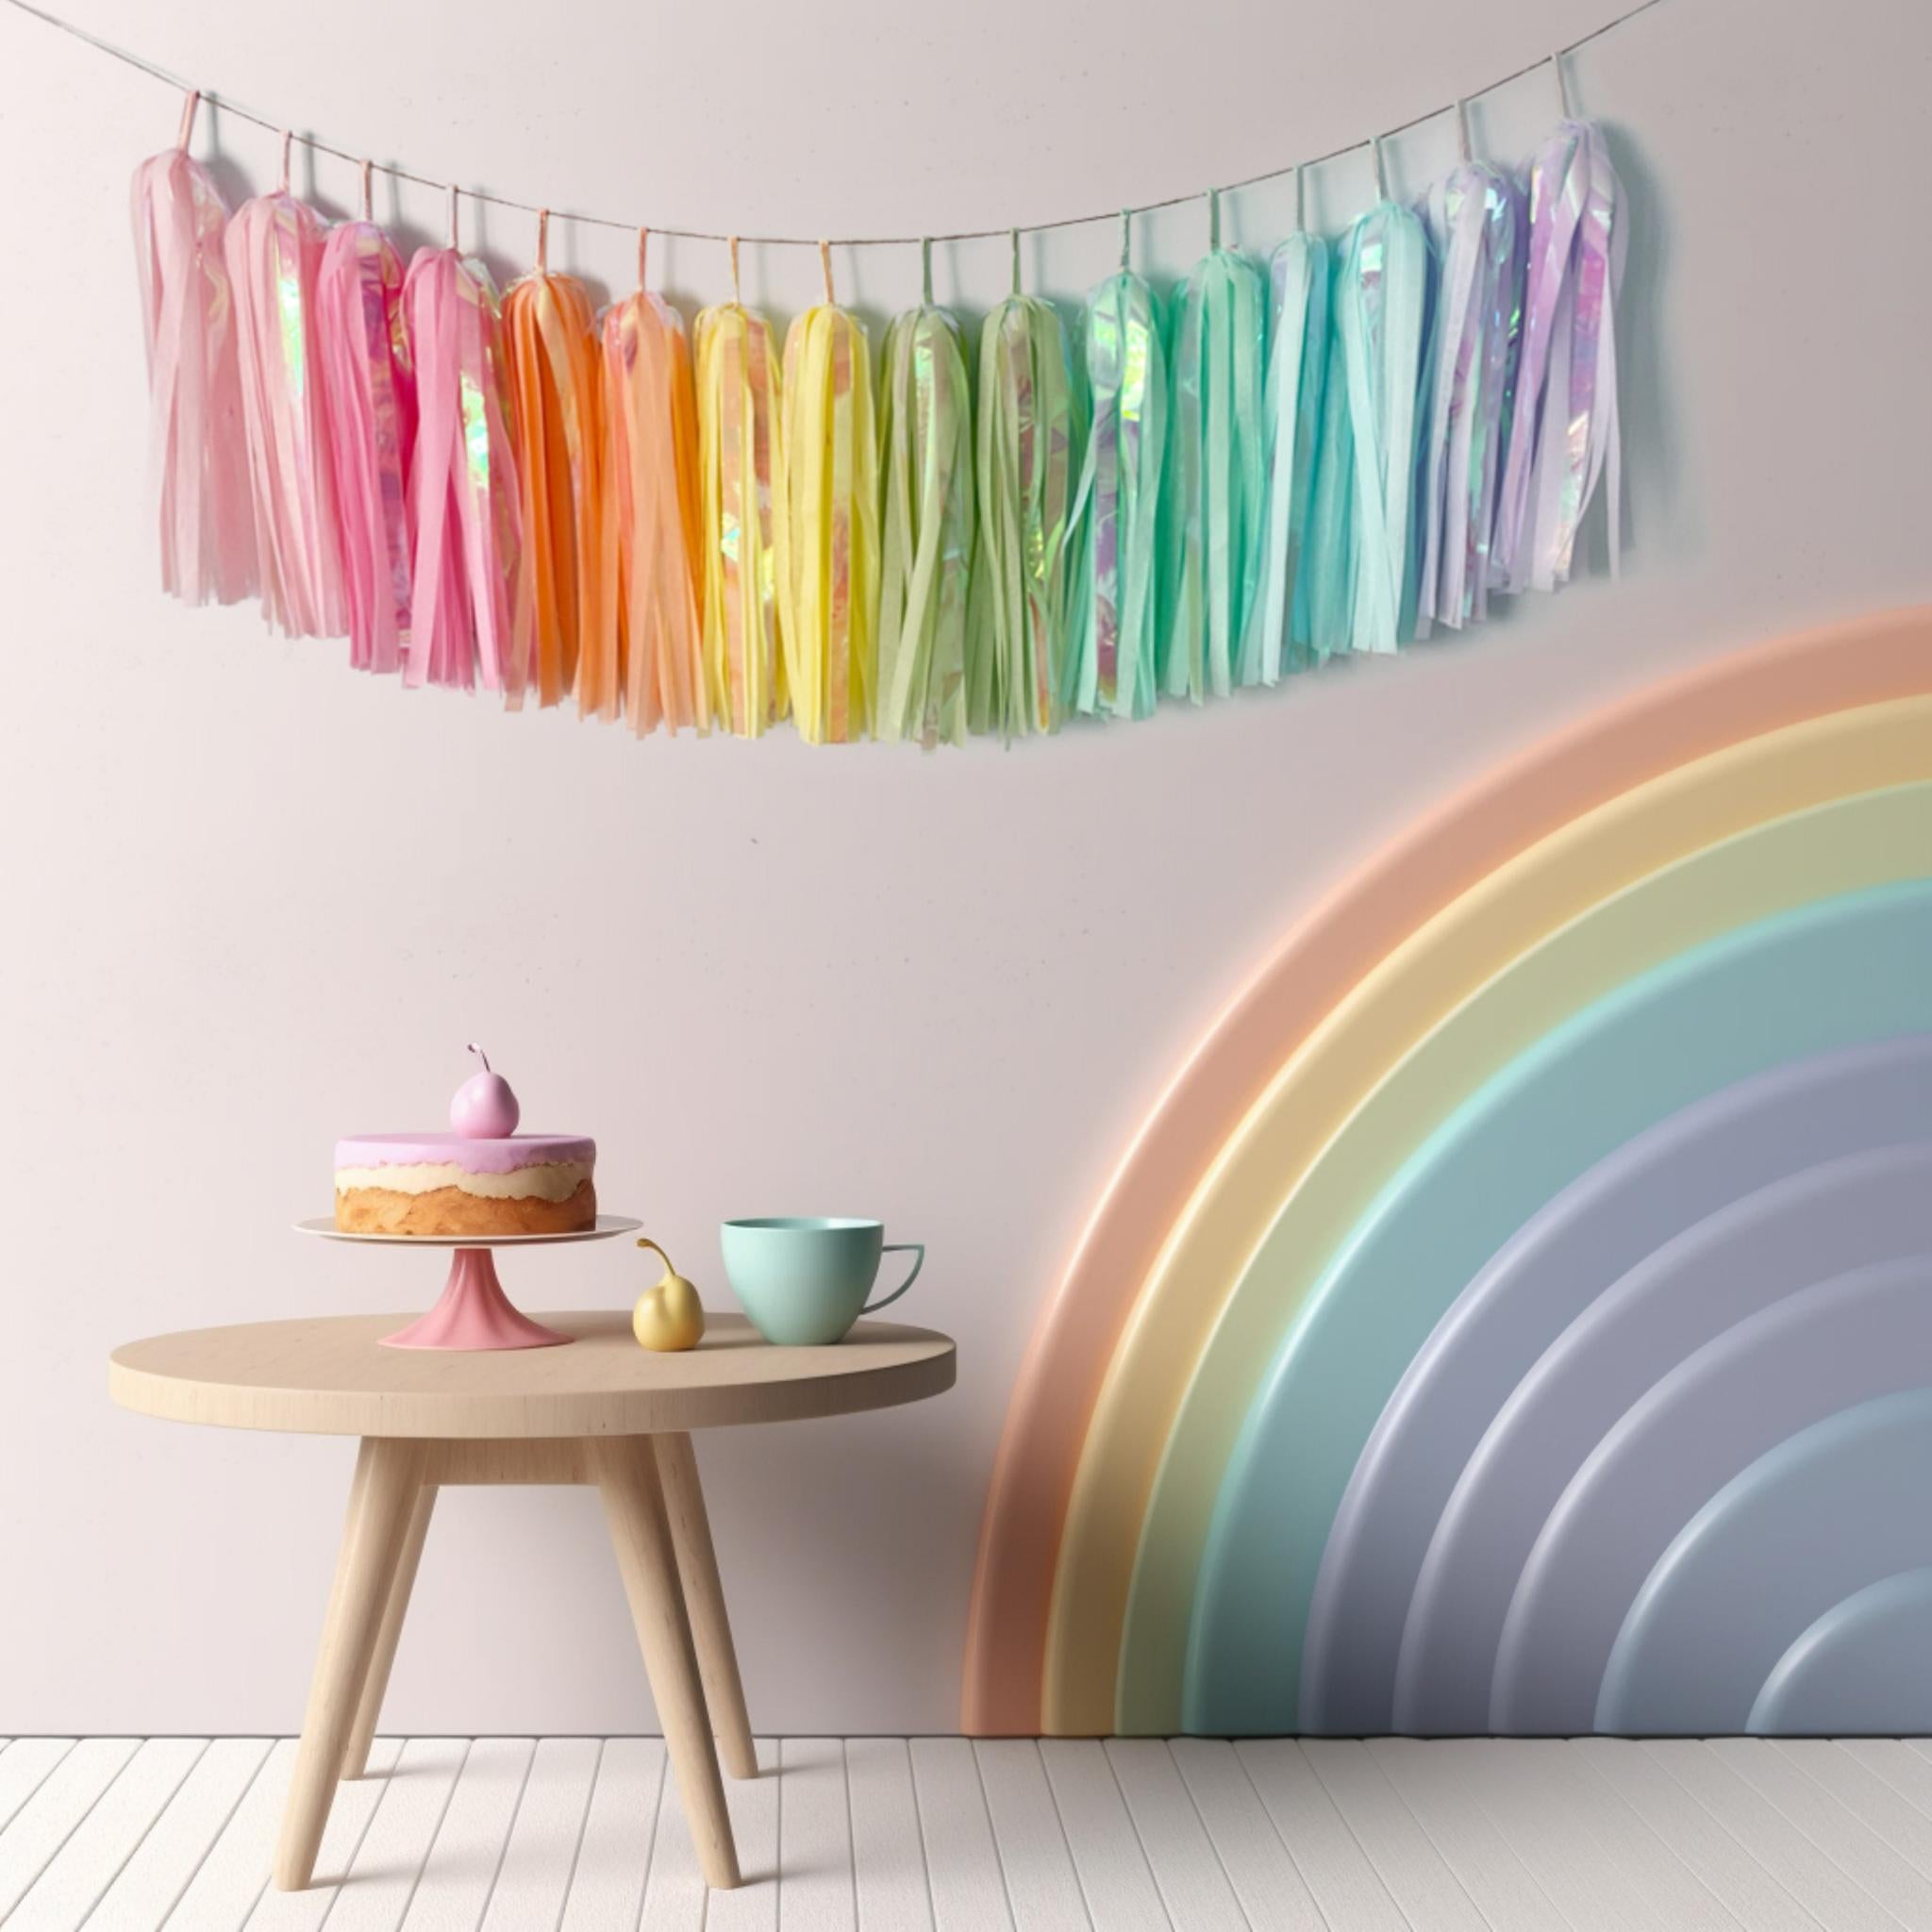 Rainbow Happy Birthday Garland, Wool, Cotton + AZO-free dyes